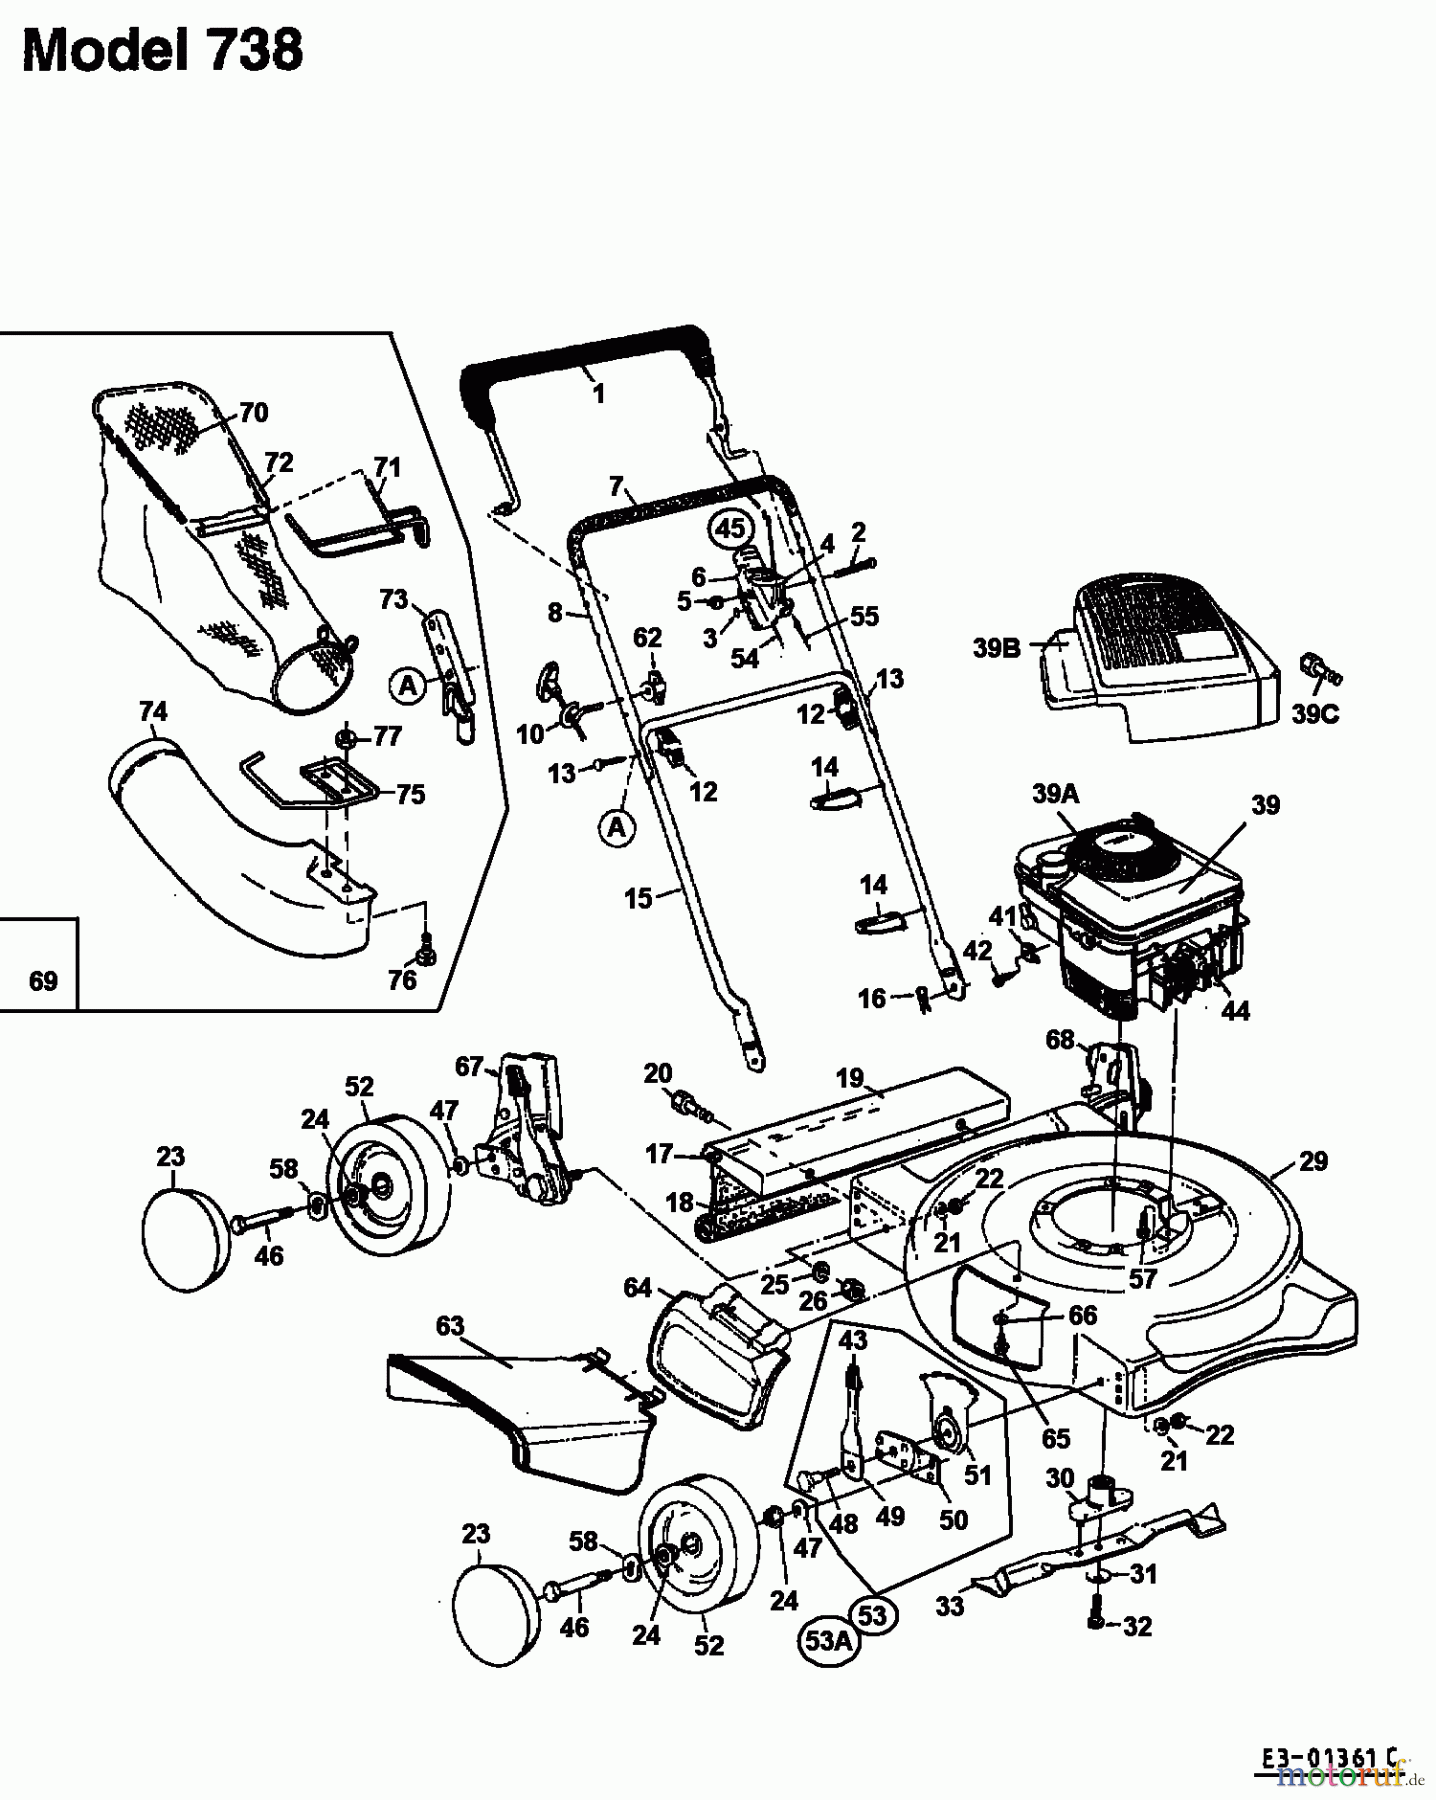  Gutbrod Petrol mower MB 52 11A-738C690  (2000) Basic machine